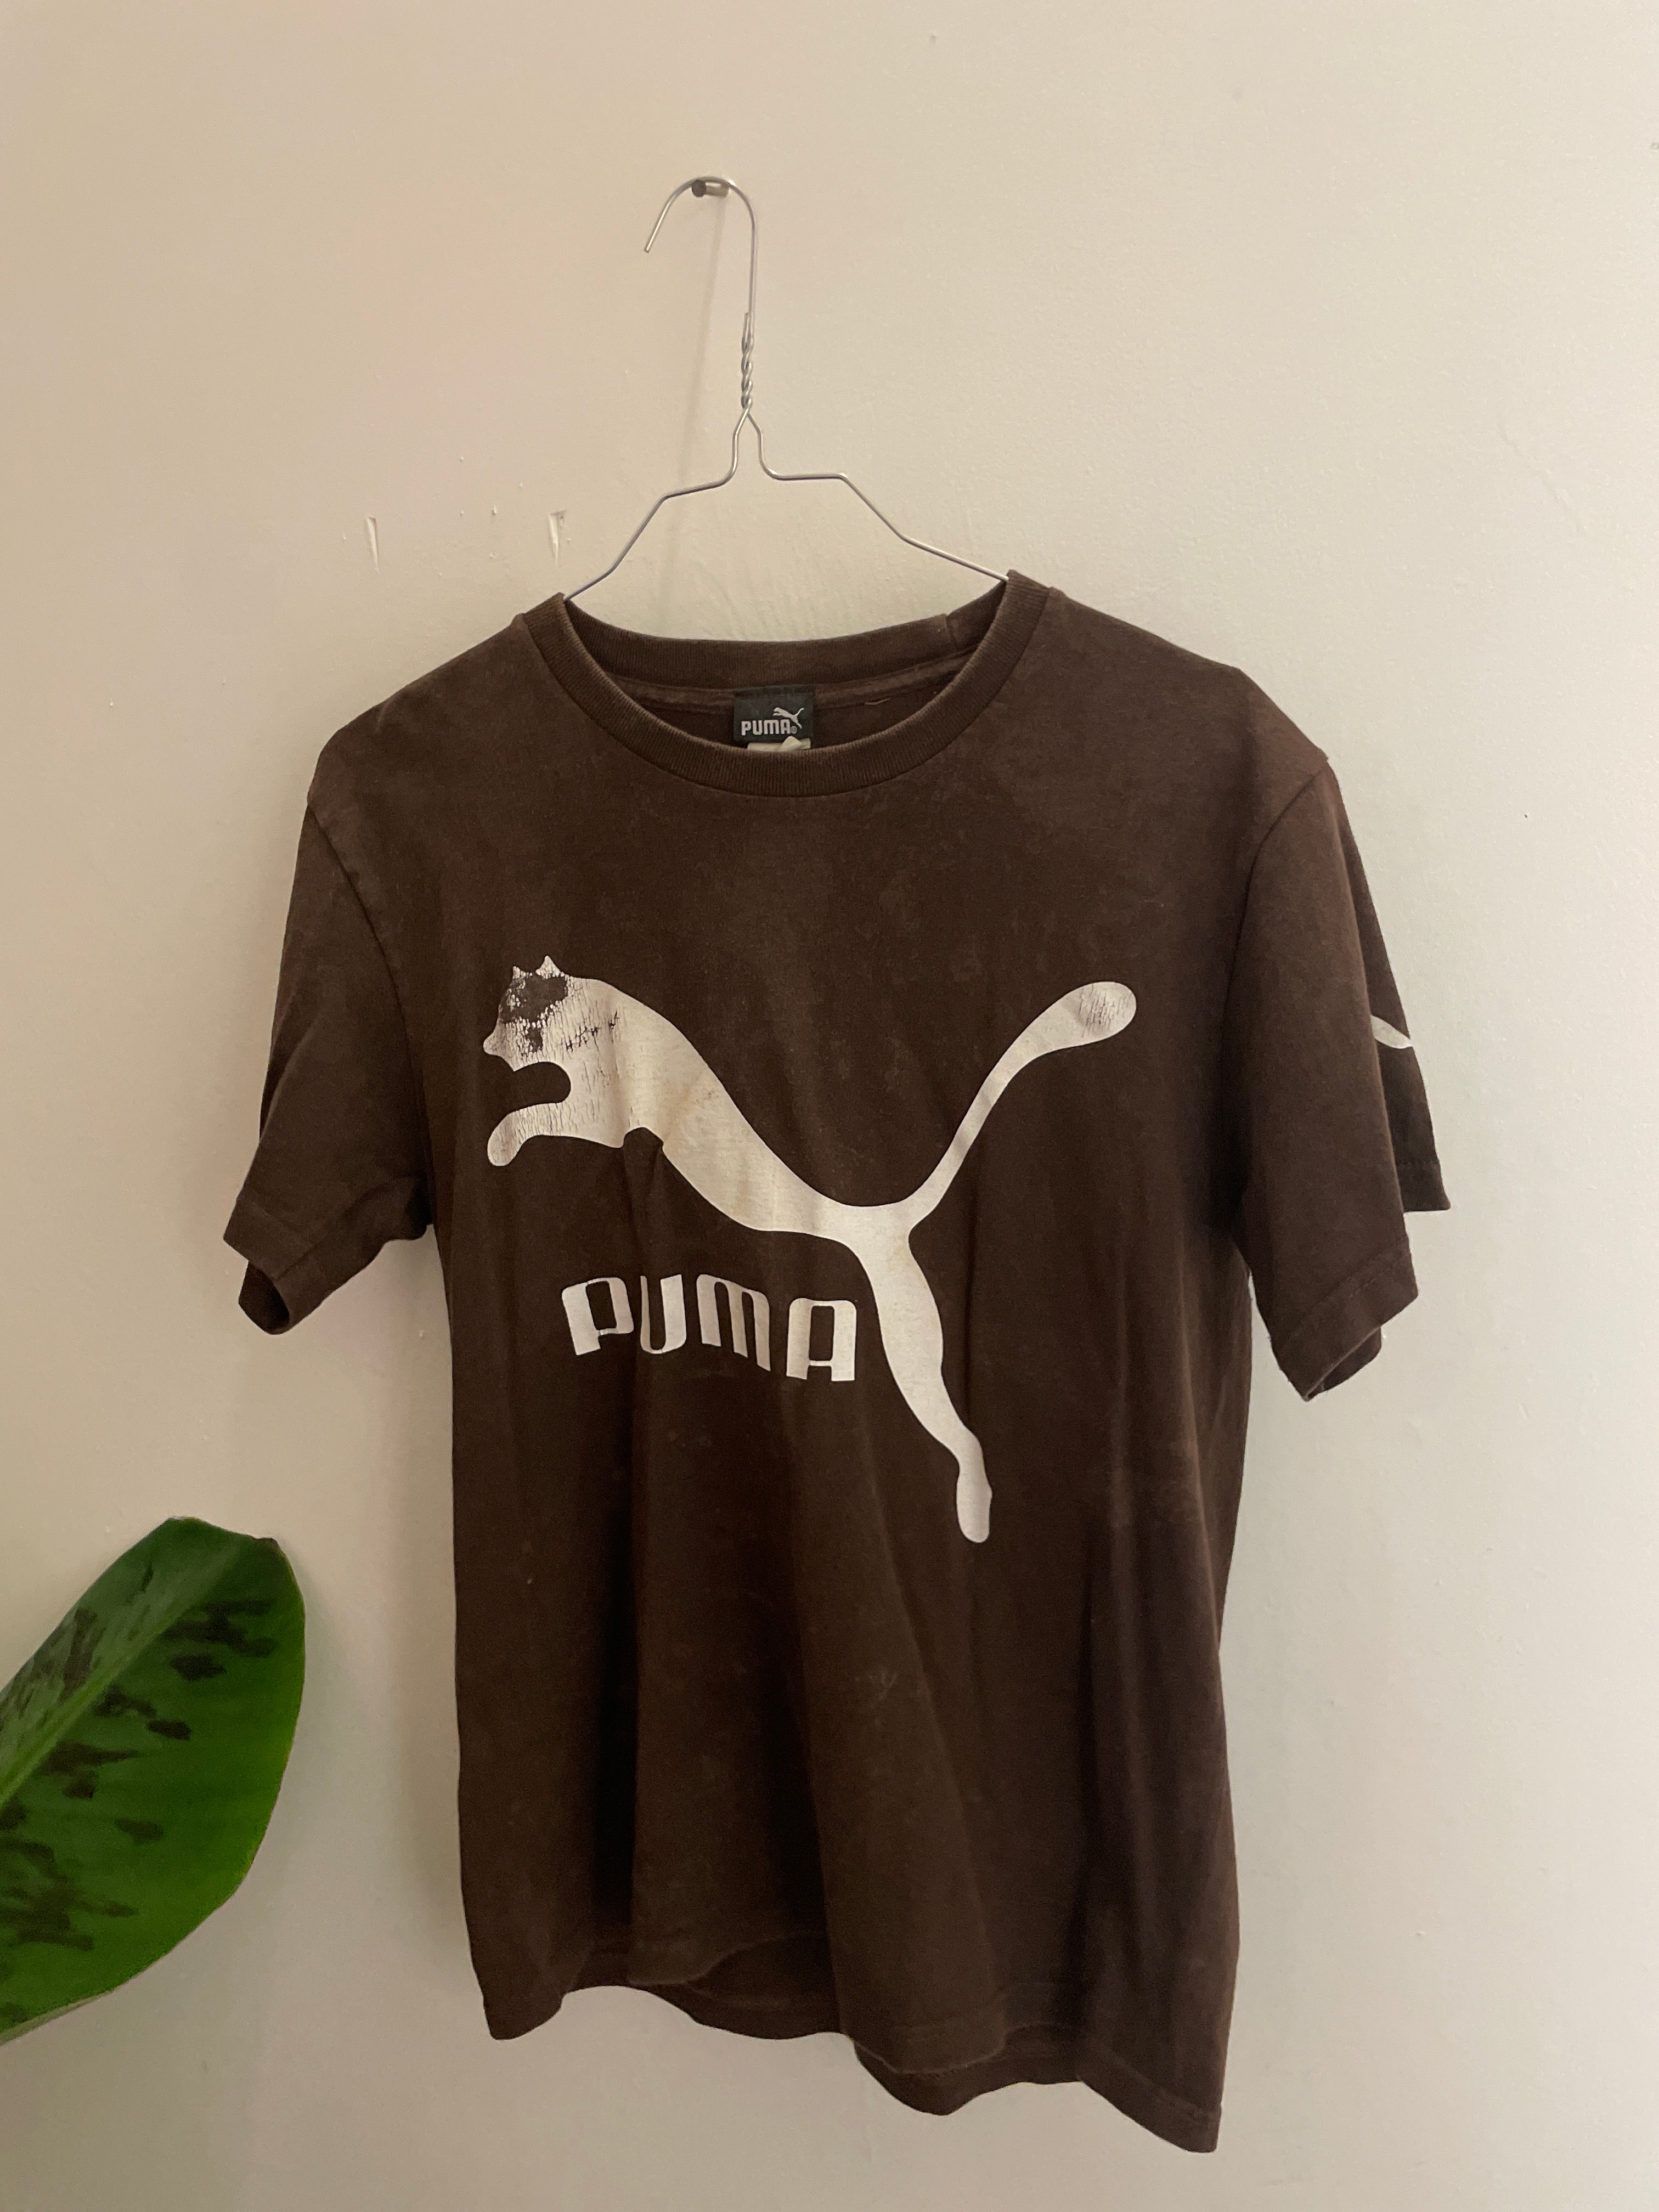 Vintage brown small puma shirt